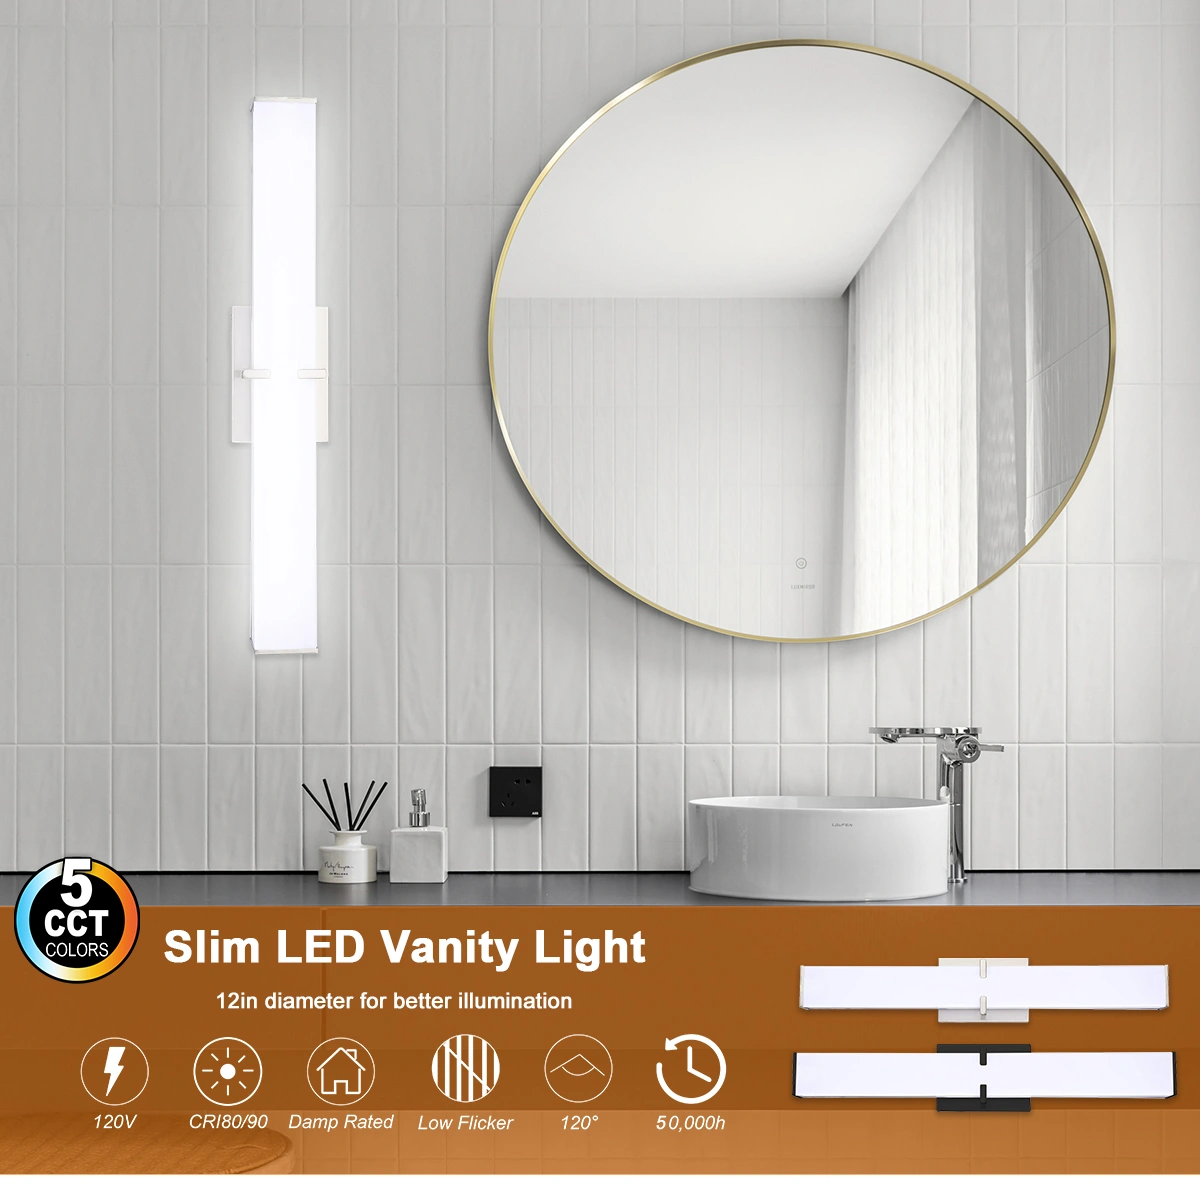 Slim LED Vanity Light